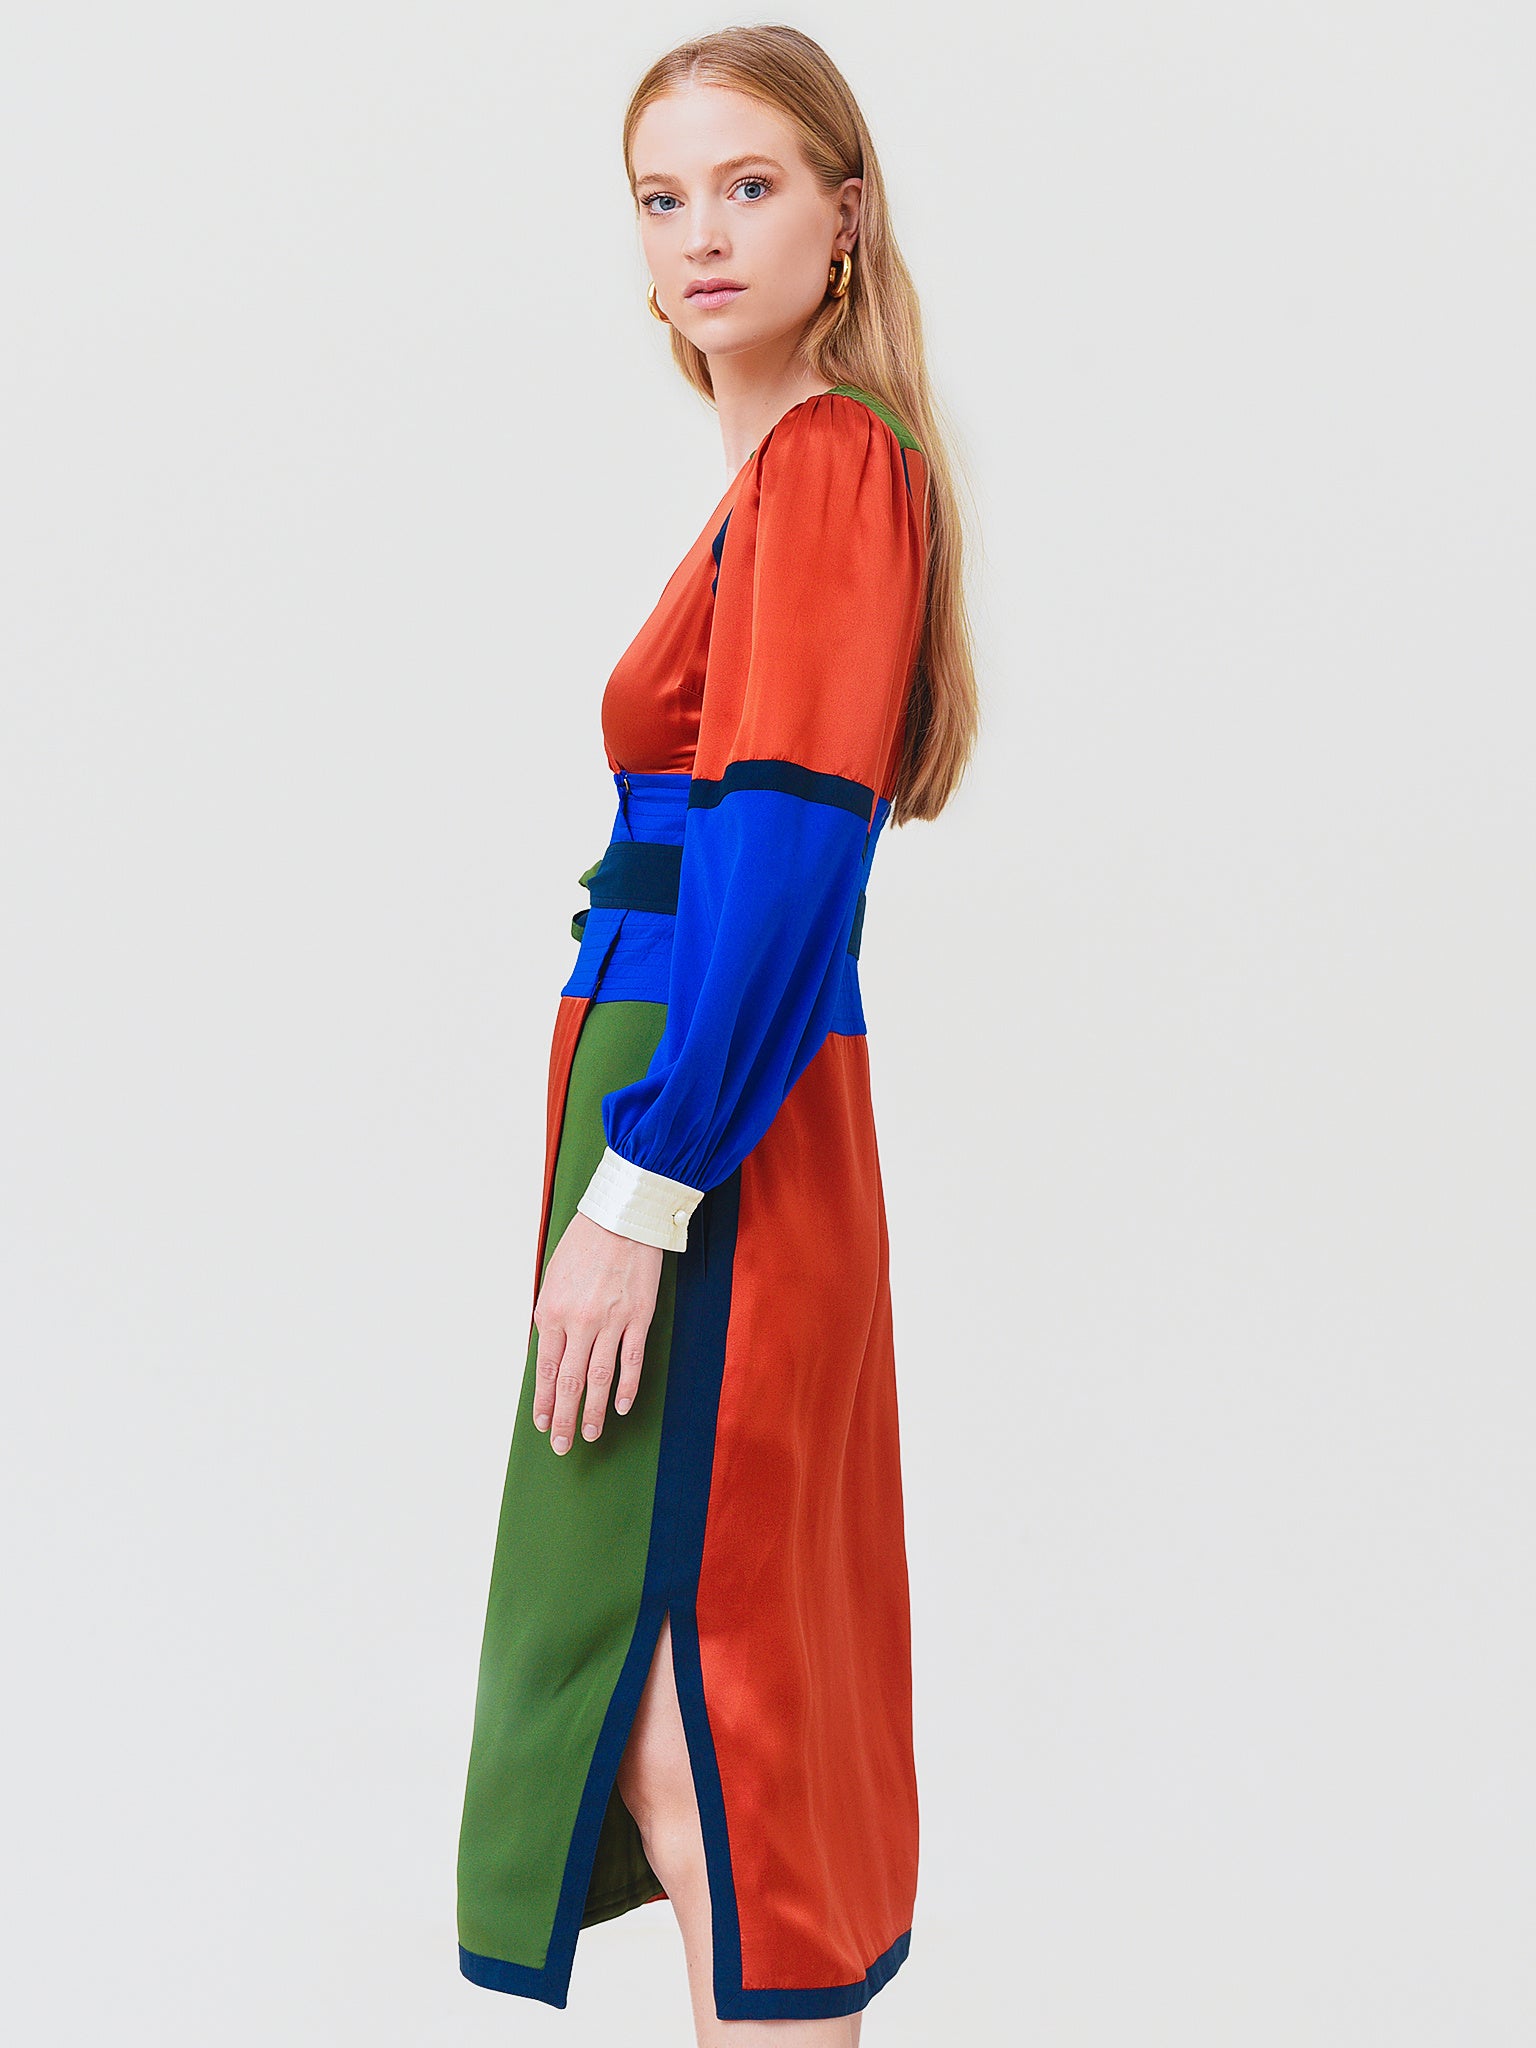 Tory Burch Women's Color-Block Wrap Dress - Saint Bernard